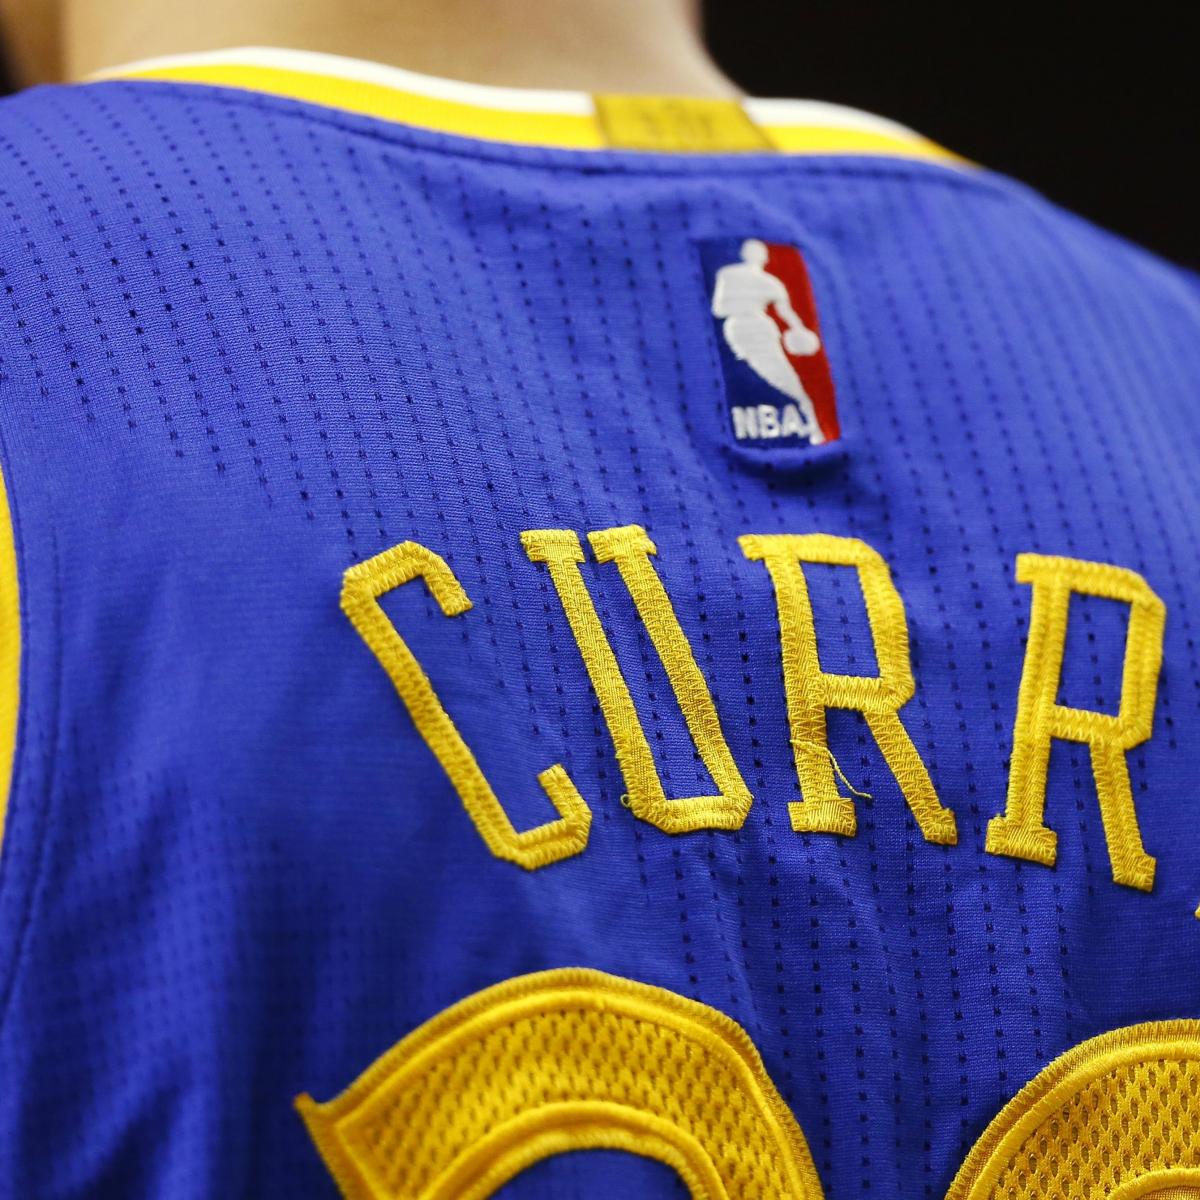 Stephen Curry still has best-selling jersey in NBA